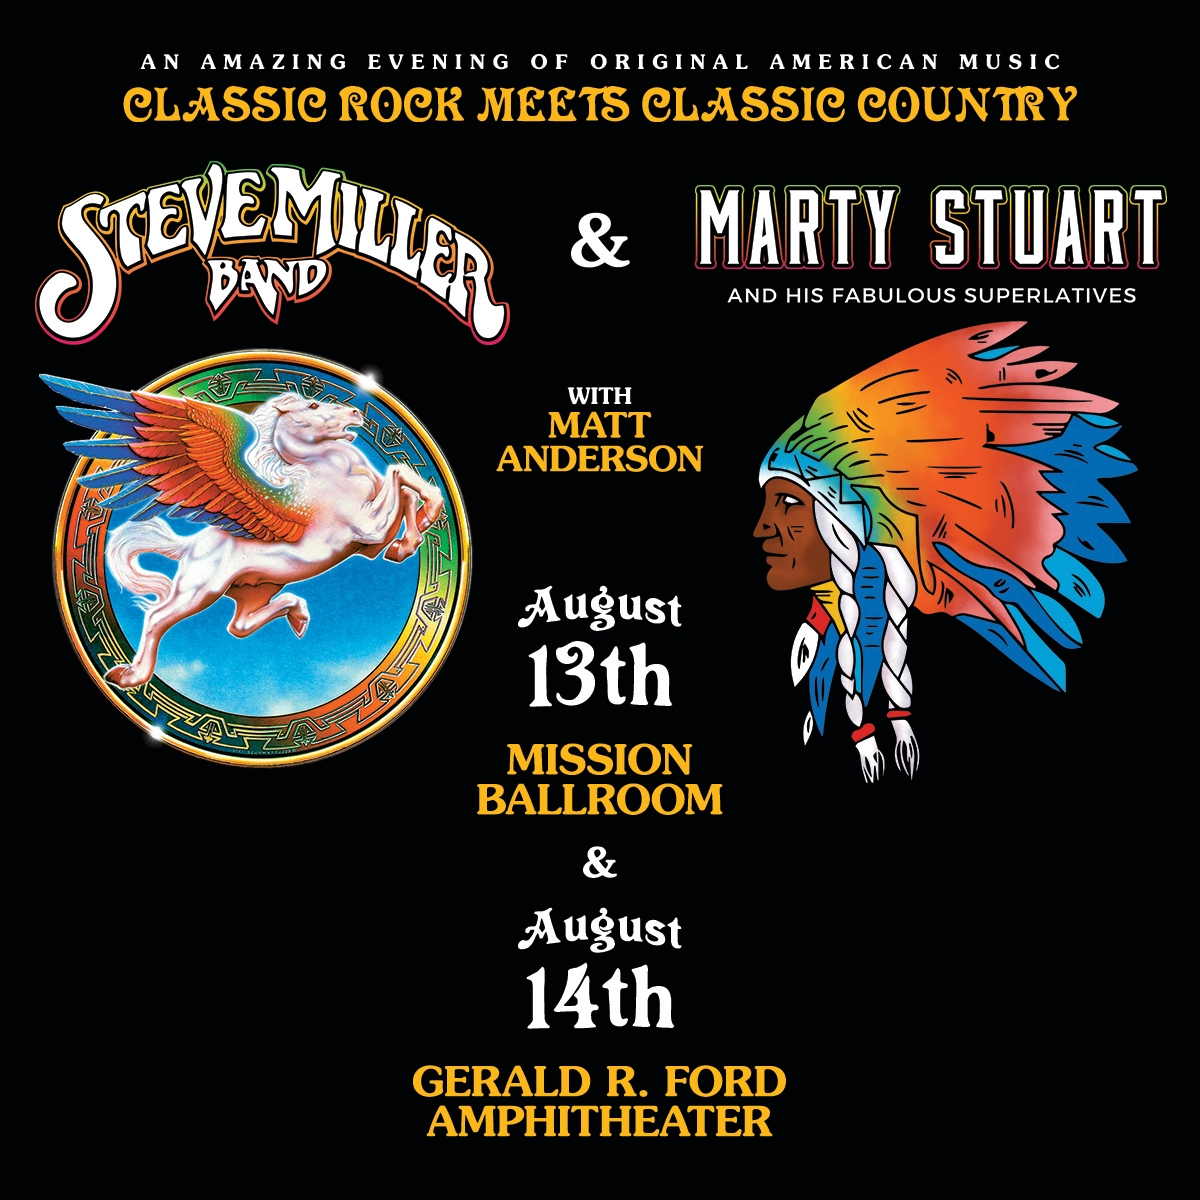 AEG Presents Steve Miller Band & Marty Stuart